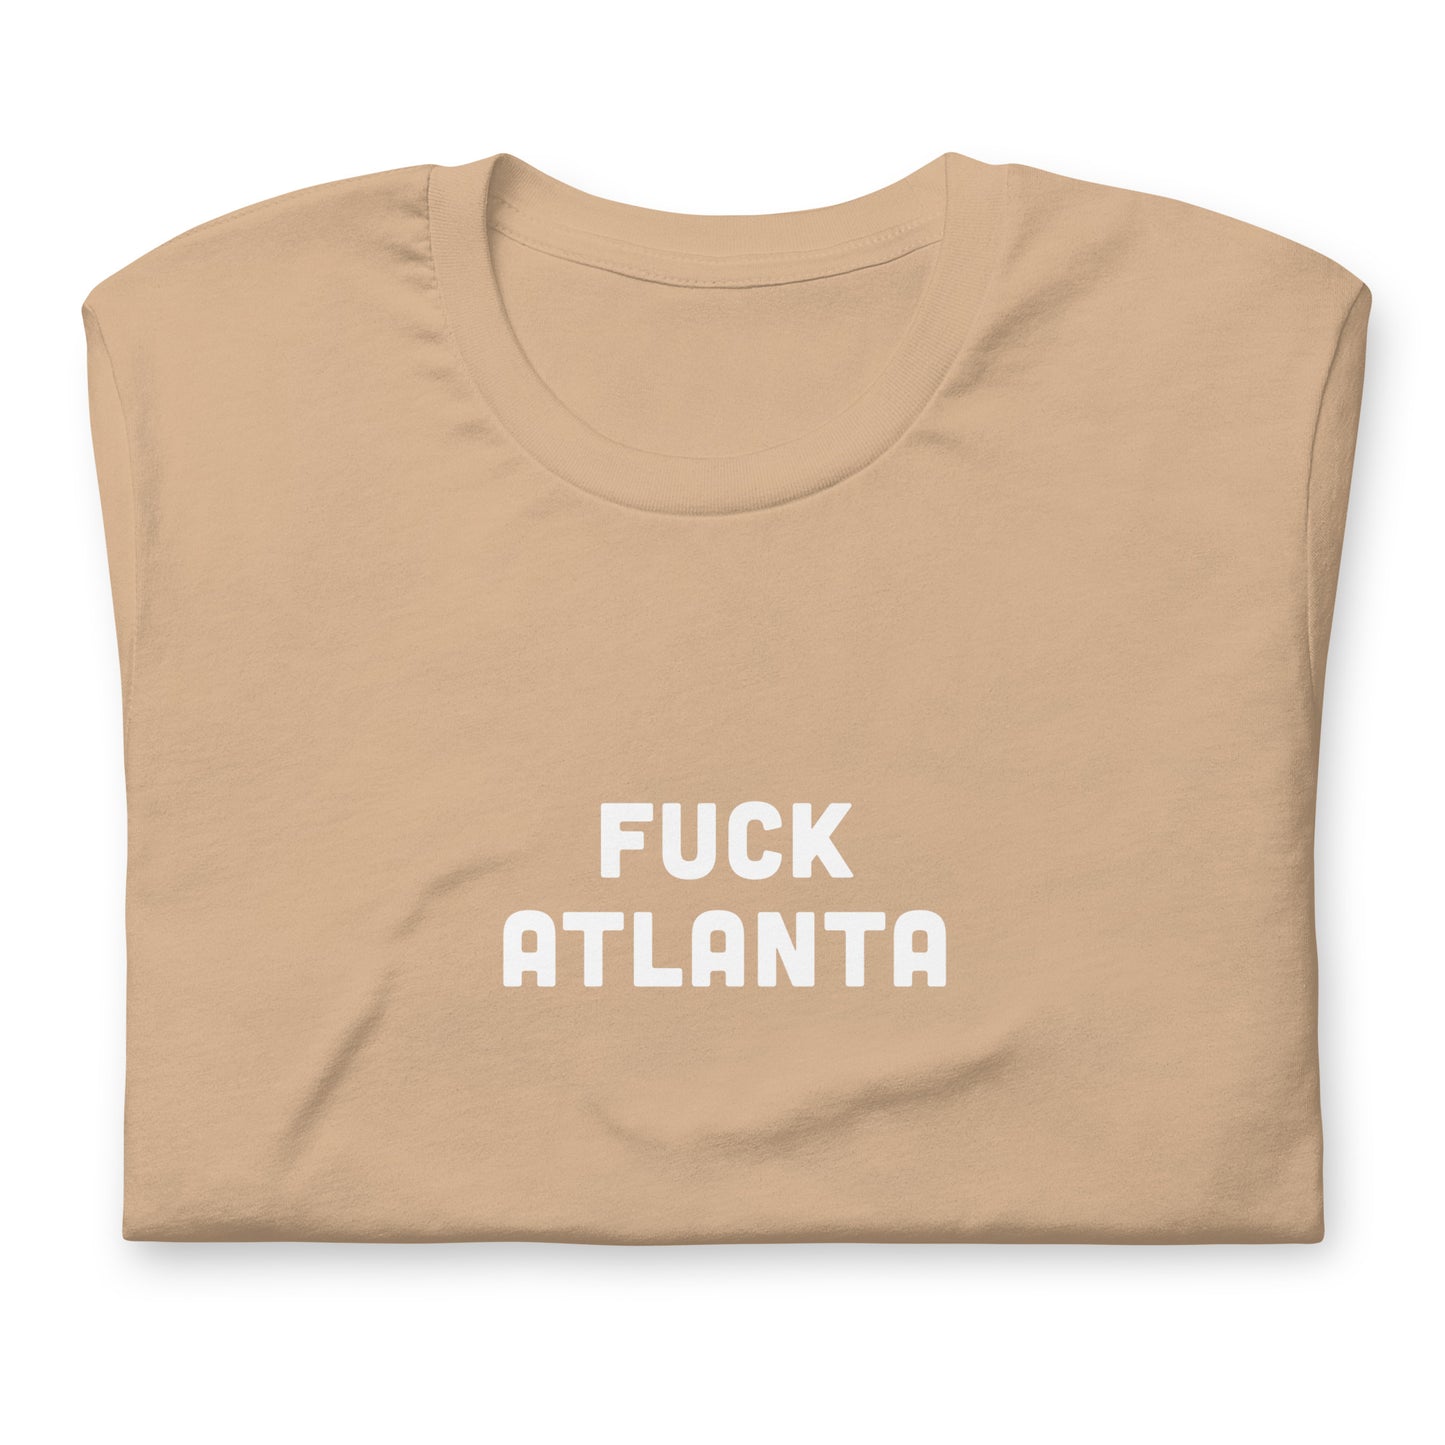 Fuck Atlanta T-Shirt Size S Color Asphalt